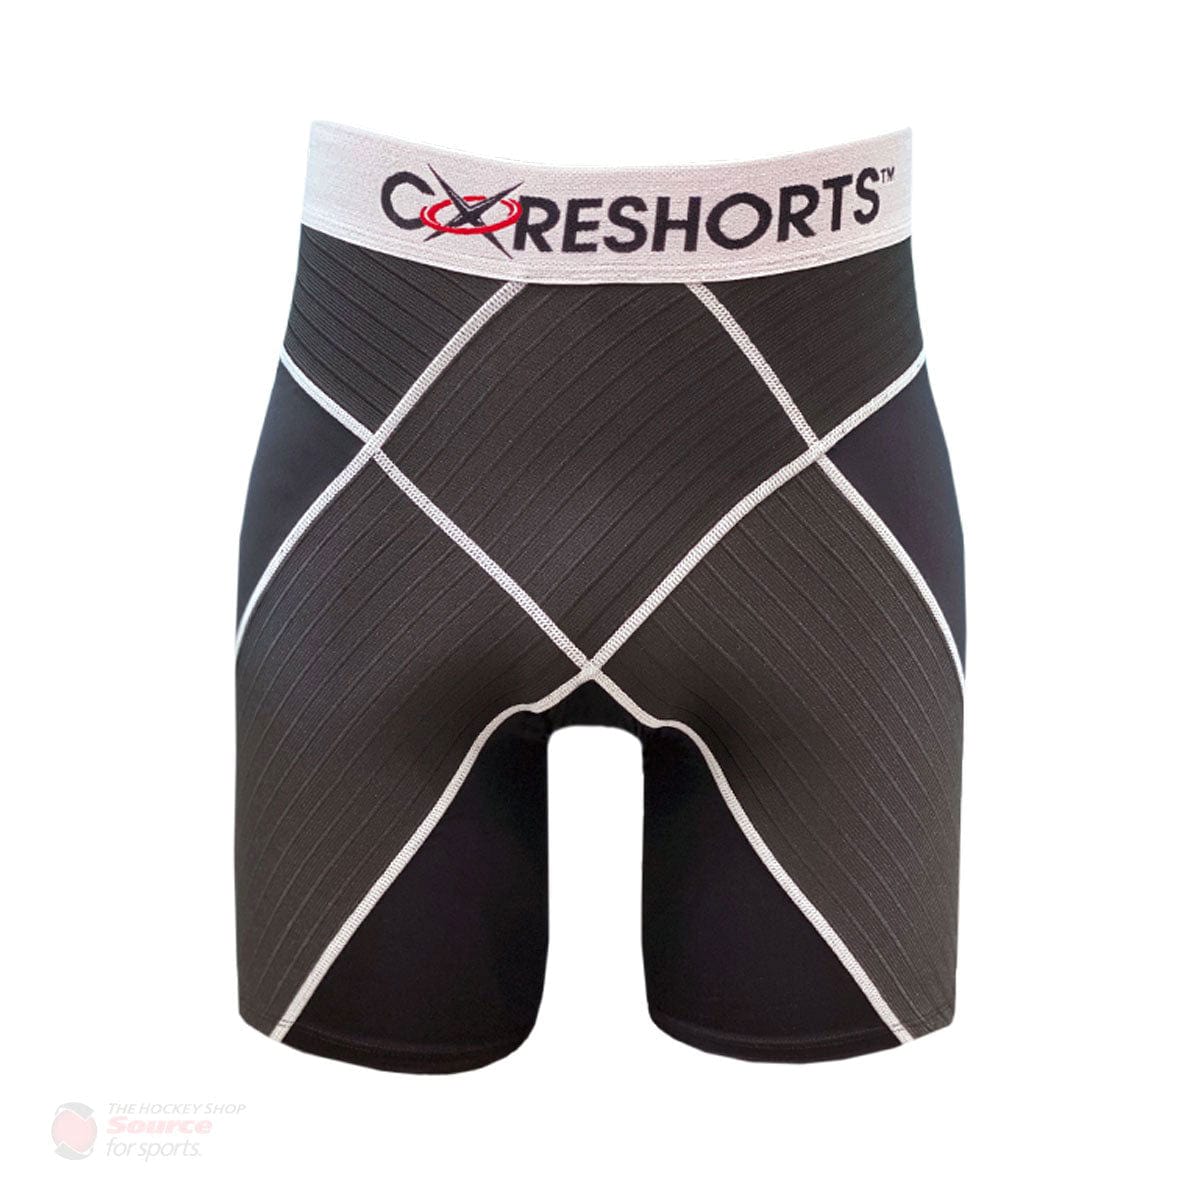 Coreshorts Pro 3.0 Senior Compression Shorts